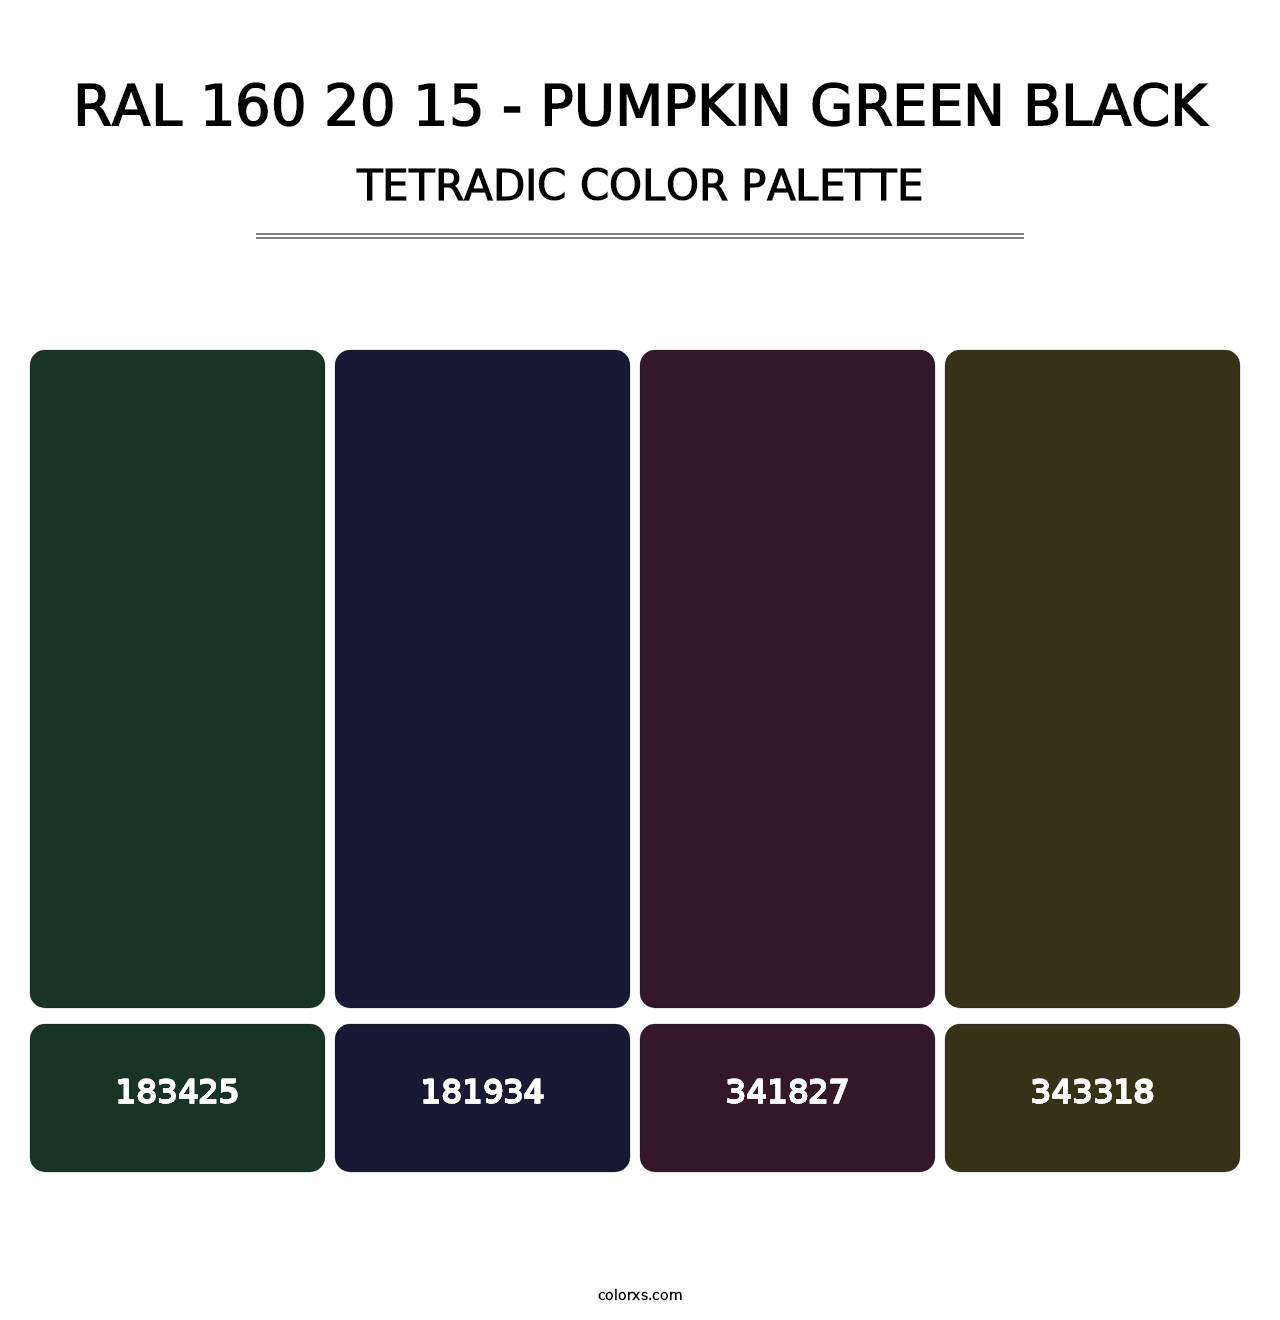 RAL 160 20 15 - Pumpkin Green Black - Tetradic Color Palette